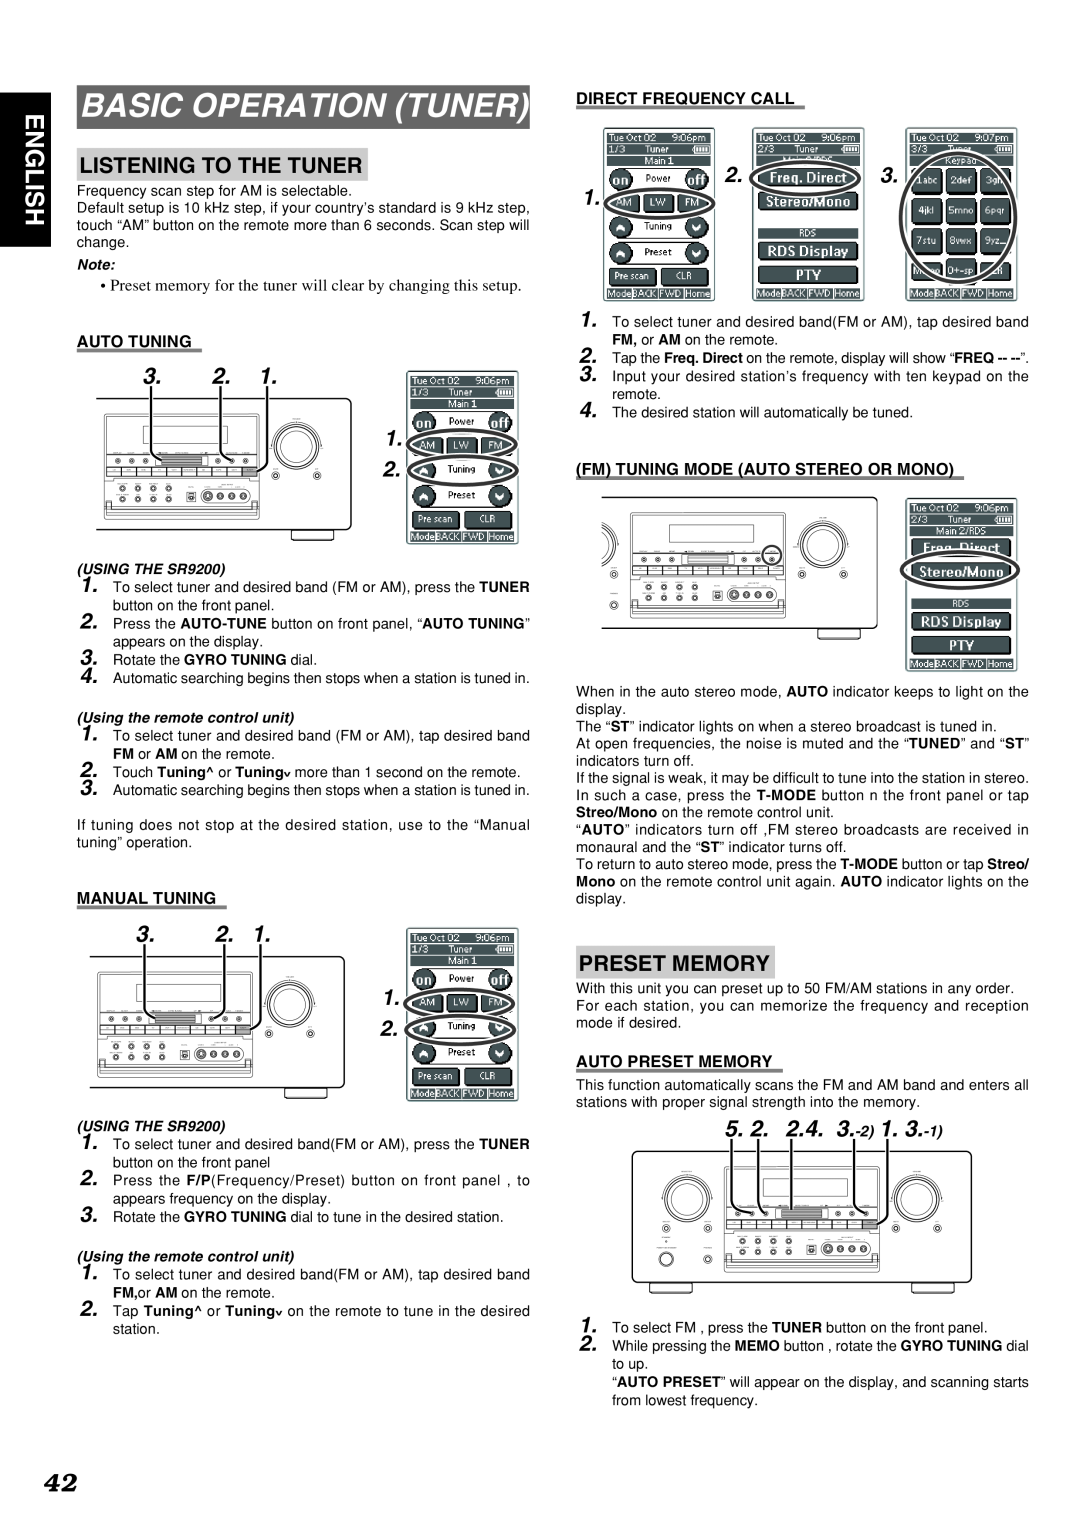 Marantz SR9200 manual Basic Operation Tuner, 3.2, Direct Frequency Call, Auto Tuning, Manual Tuning, Auto Preset Memory 